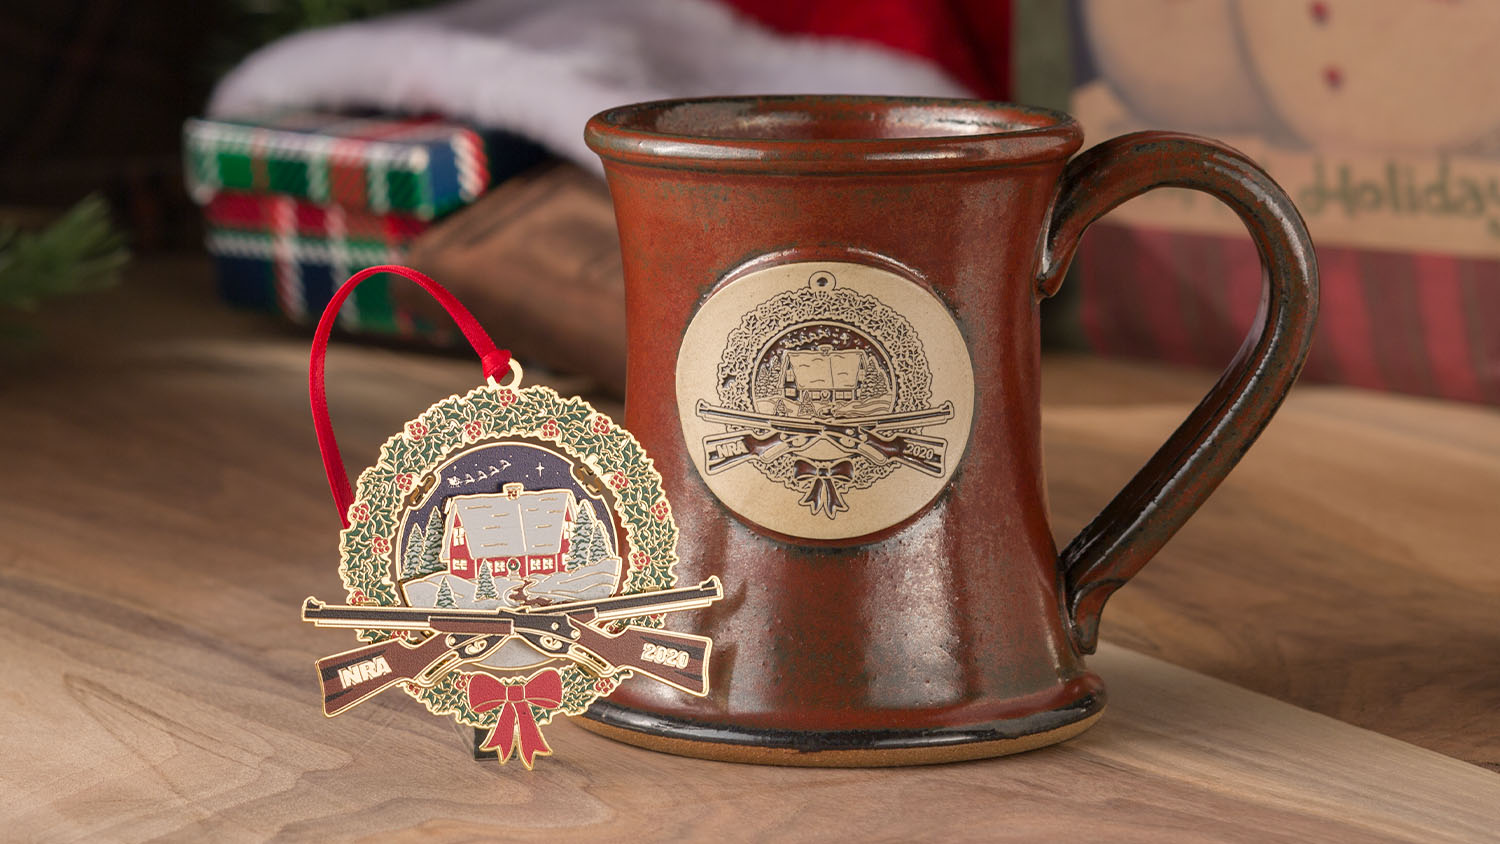 Christmas Comes Early - Limited Edition Christmas Ornament and Mug Now Available at NRAstore.com